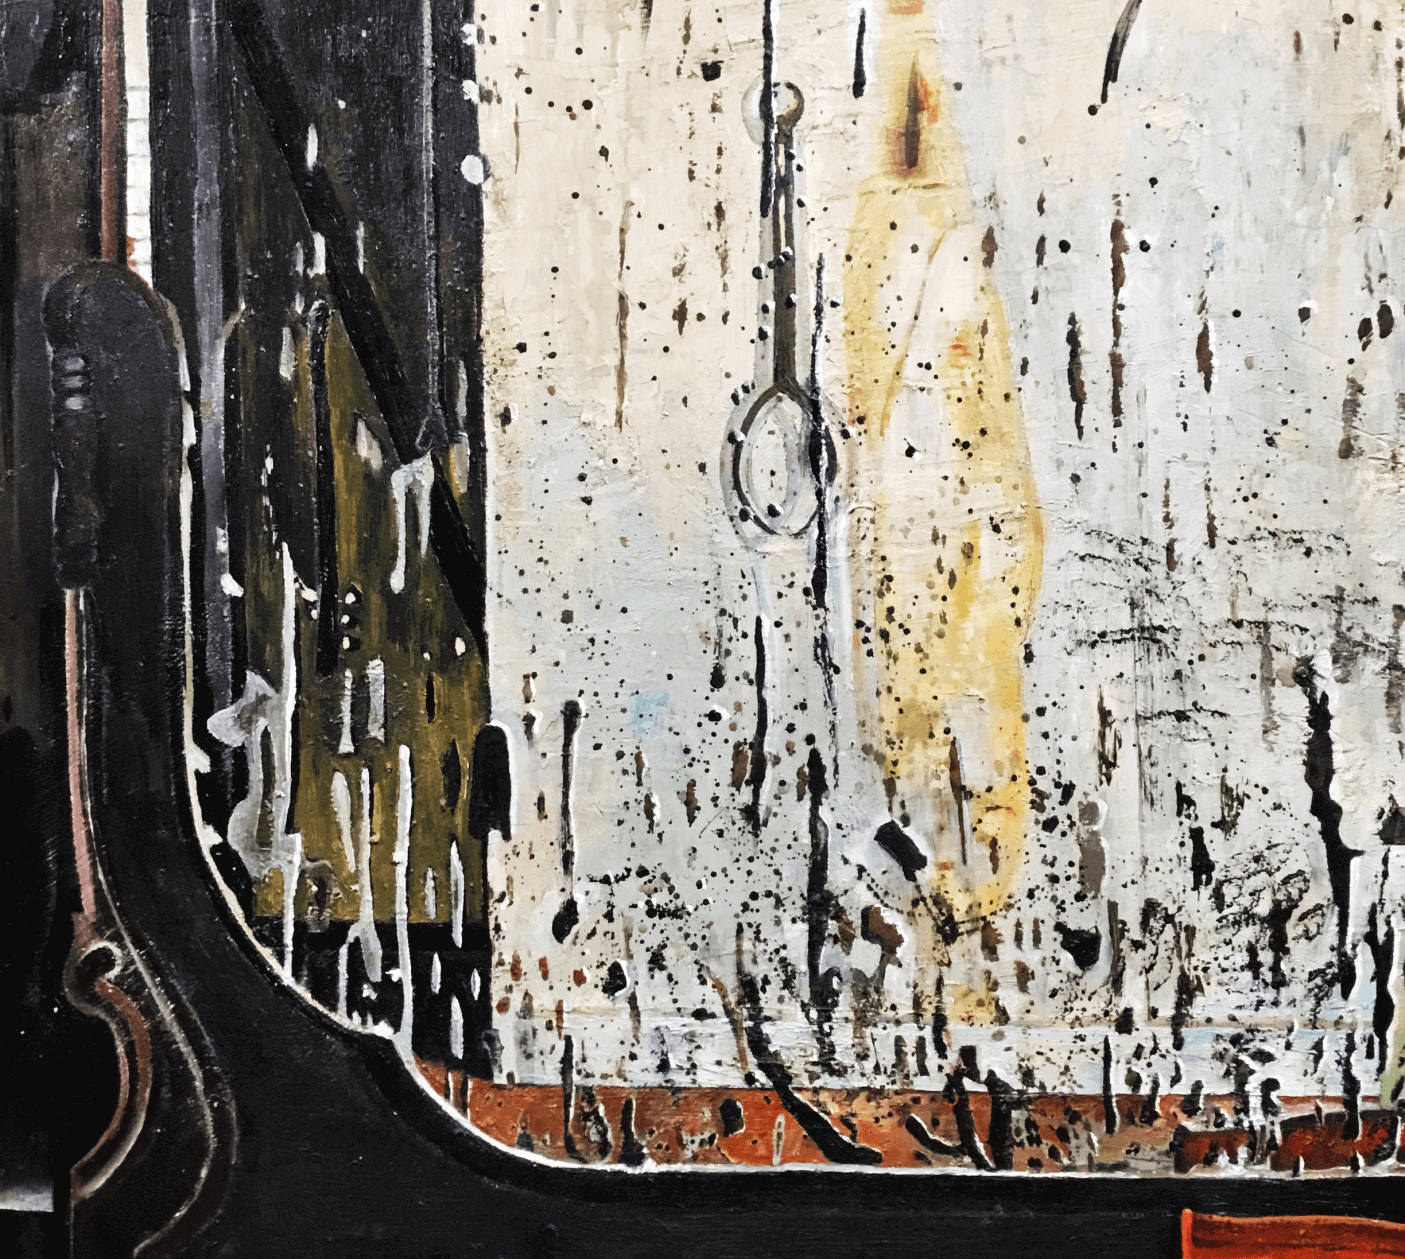 (detail) Simon Dinnerstein, The Sink, oil on wood panel, 96 x 48 inches, 1974 (photo: Matthew Ballou, courtesy of the artist)